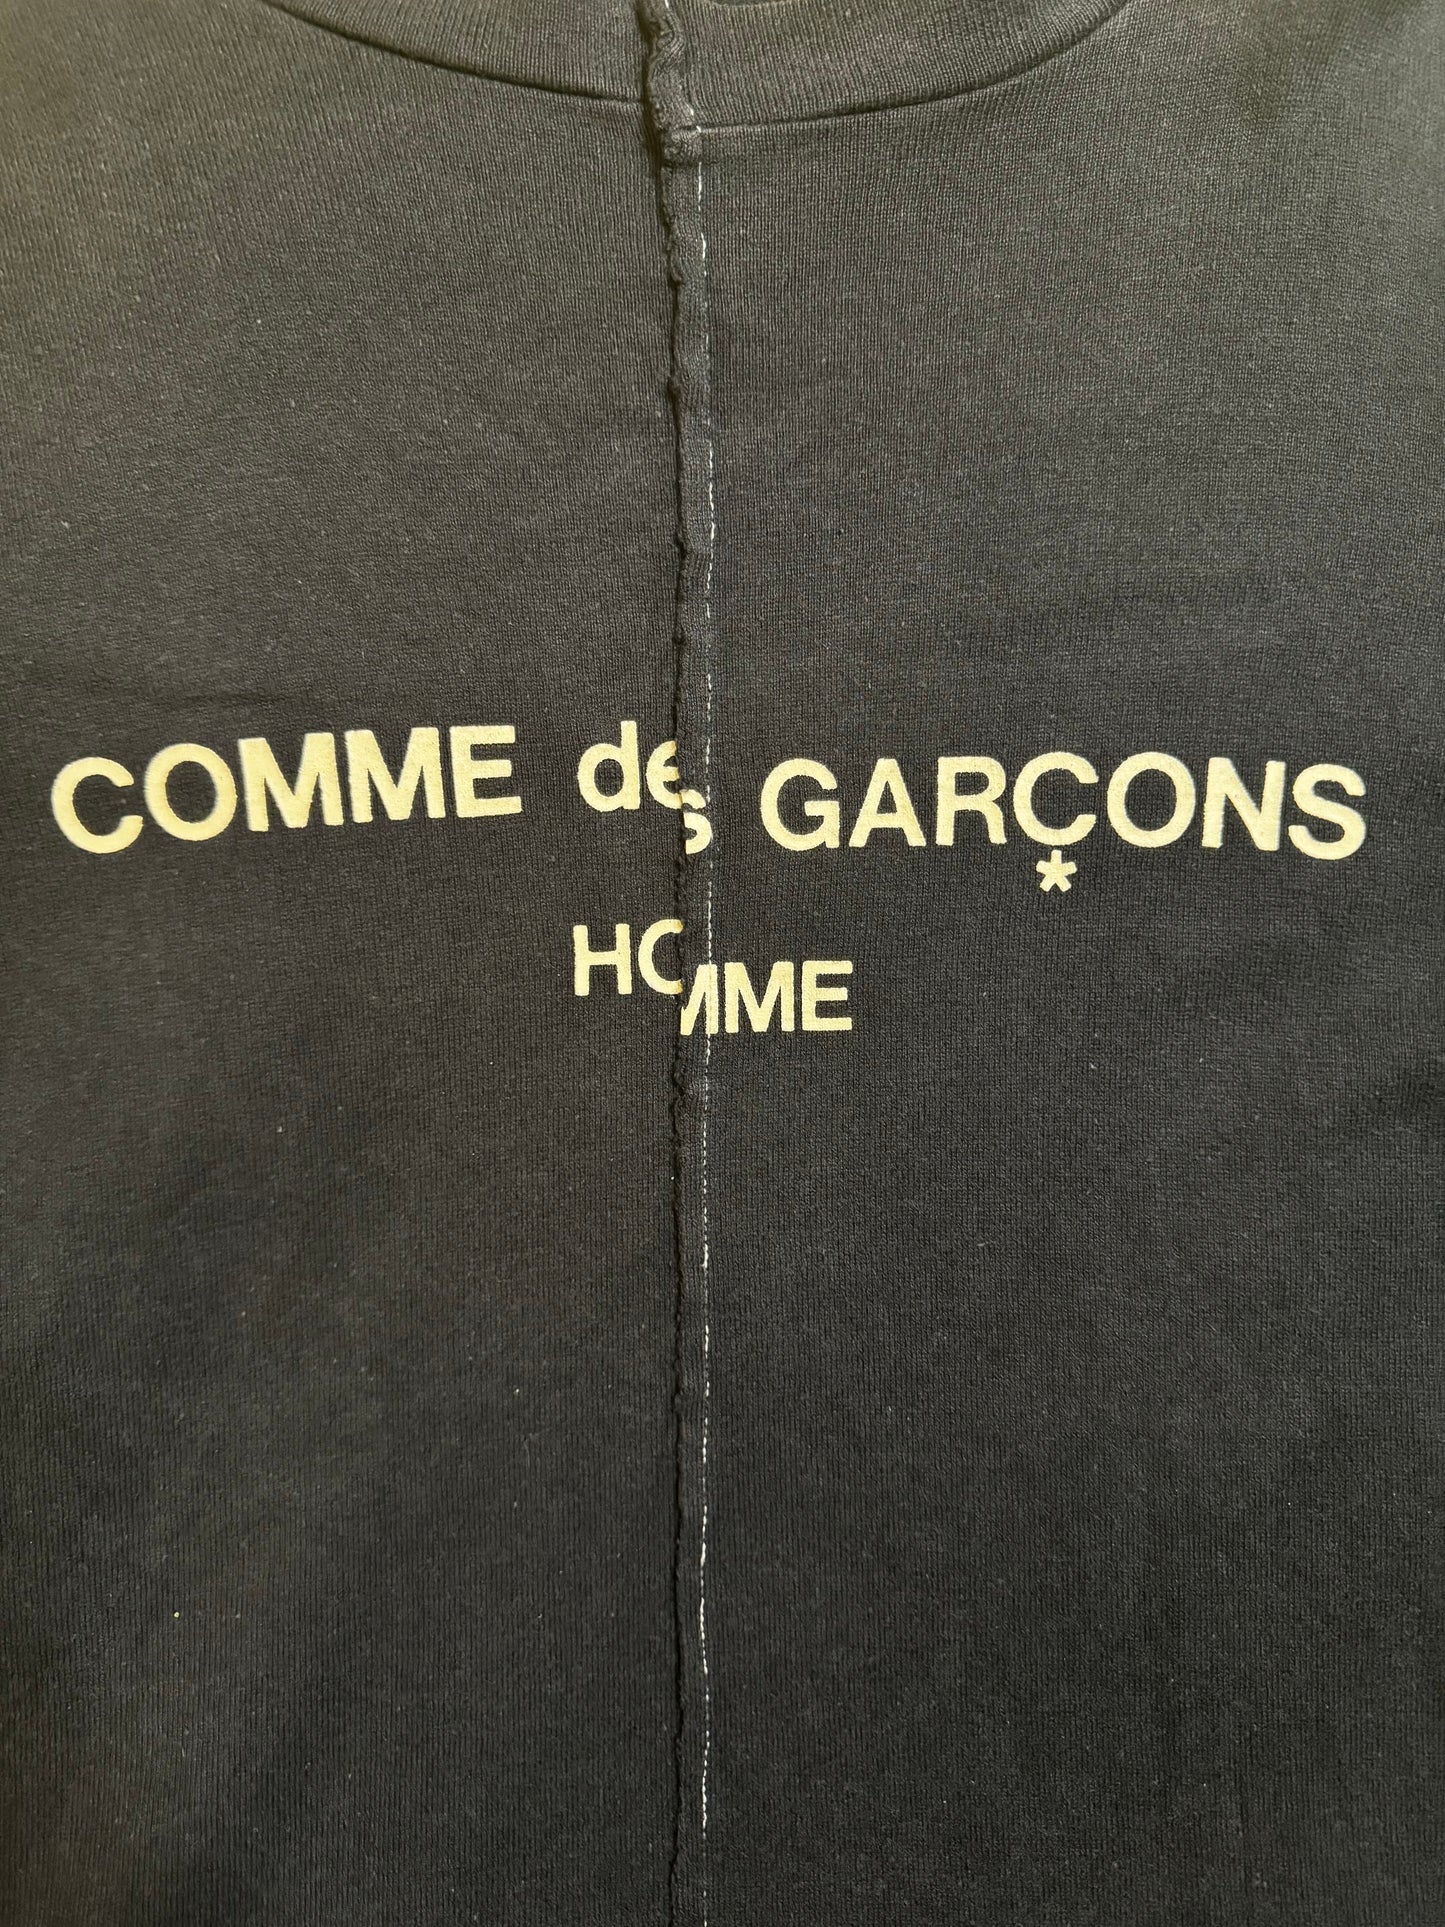 Comme Des Garcons Homme AD 1993 Split Logo Long Sleeve